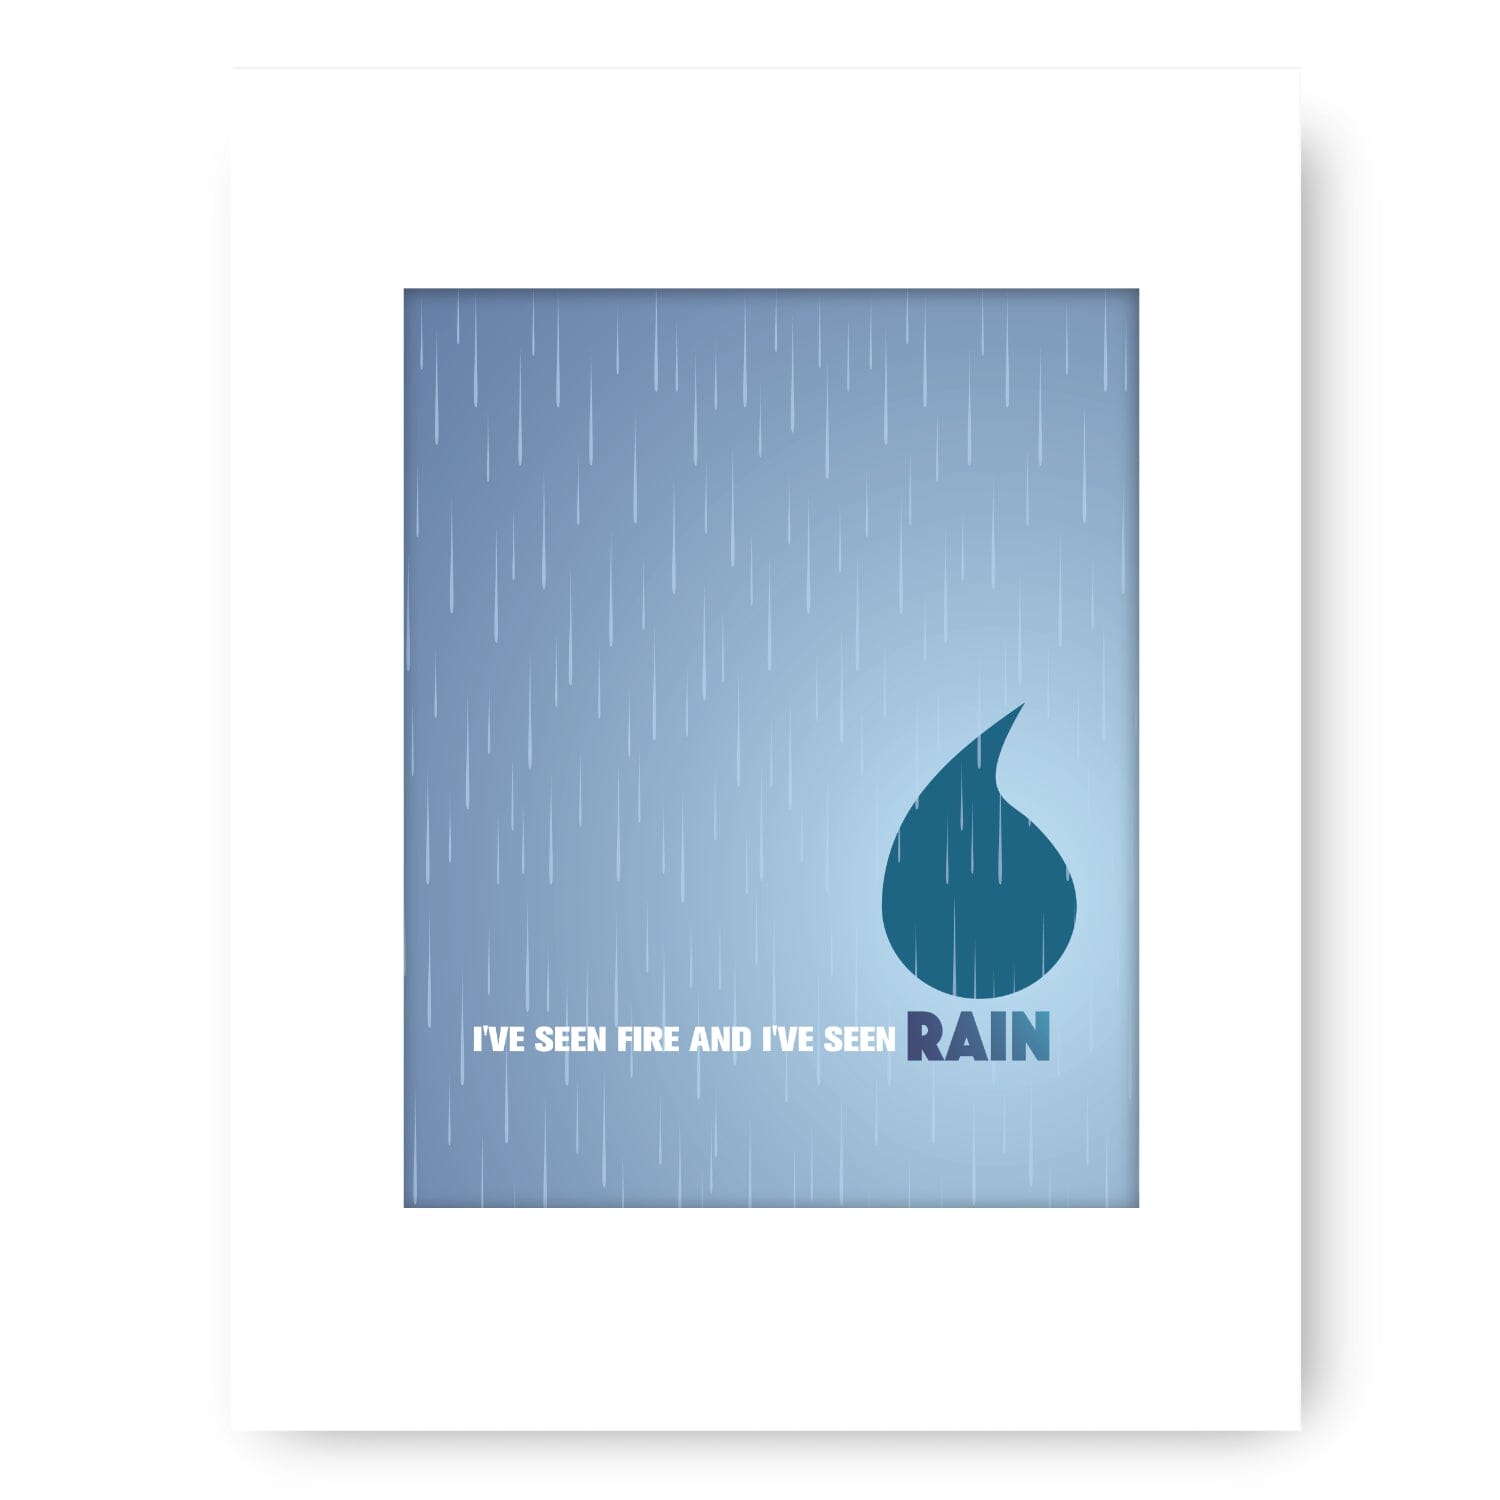 Fire and Rain by James Taylor - Music Wall Art Print Poster Song Lyrics Art Song Lyrics Art 8x10 White Matted Print 